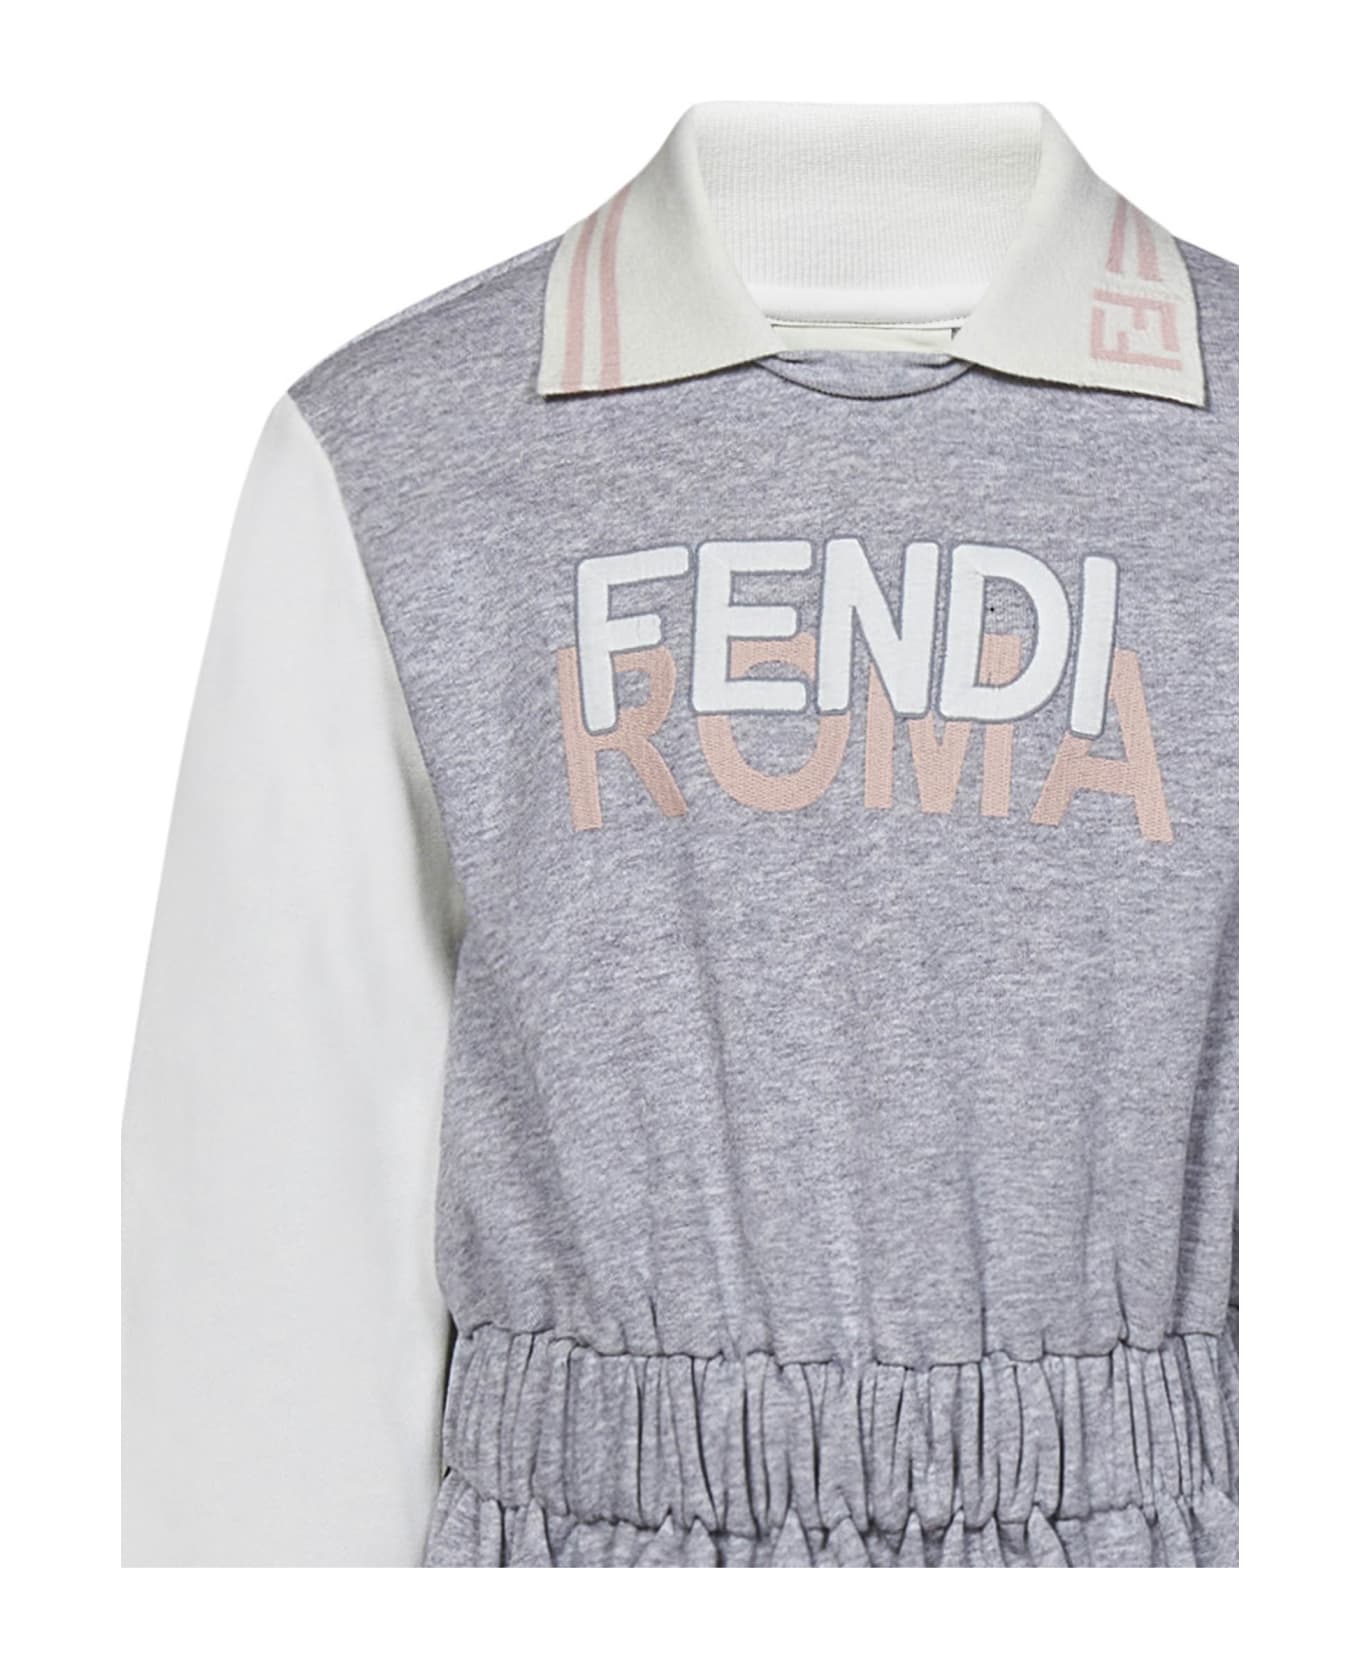 Fendi Dress - Grey/gesso ジャンプスーツ